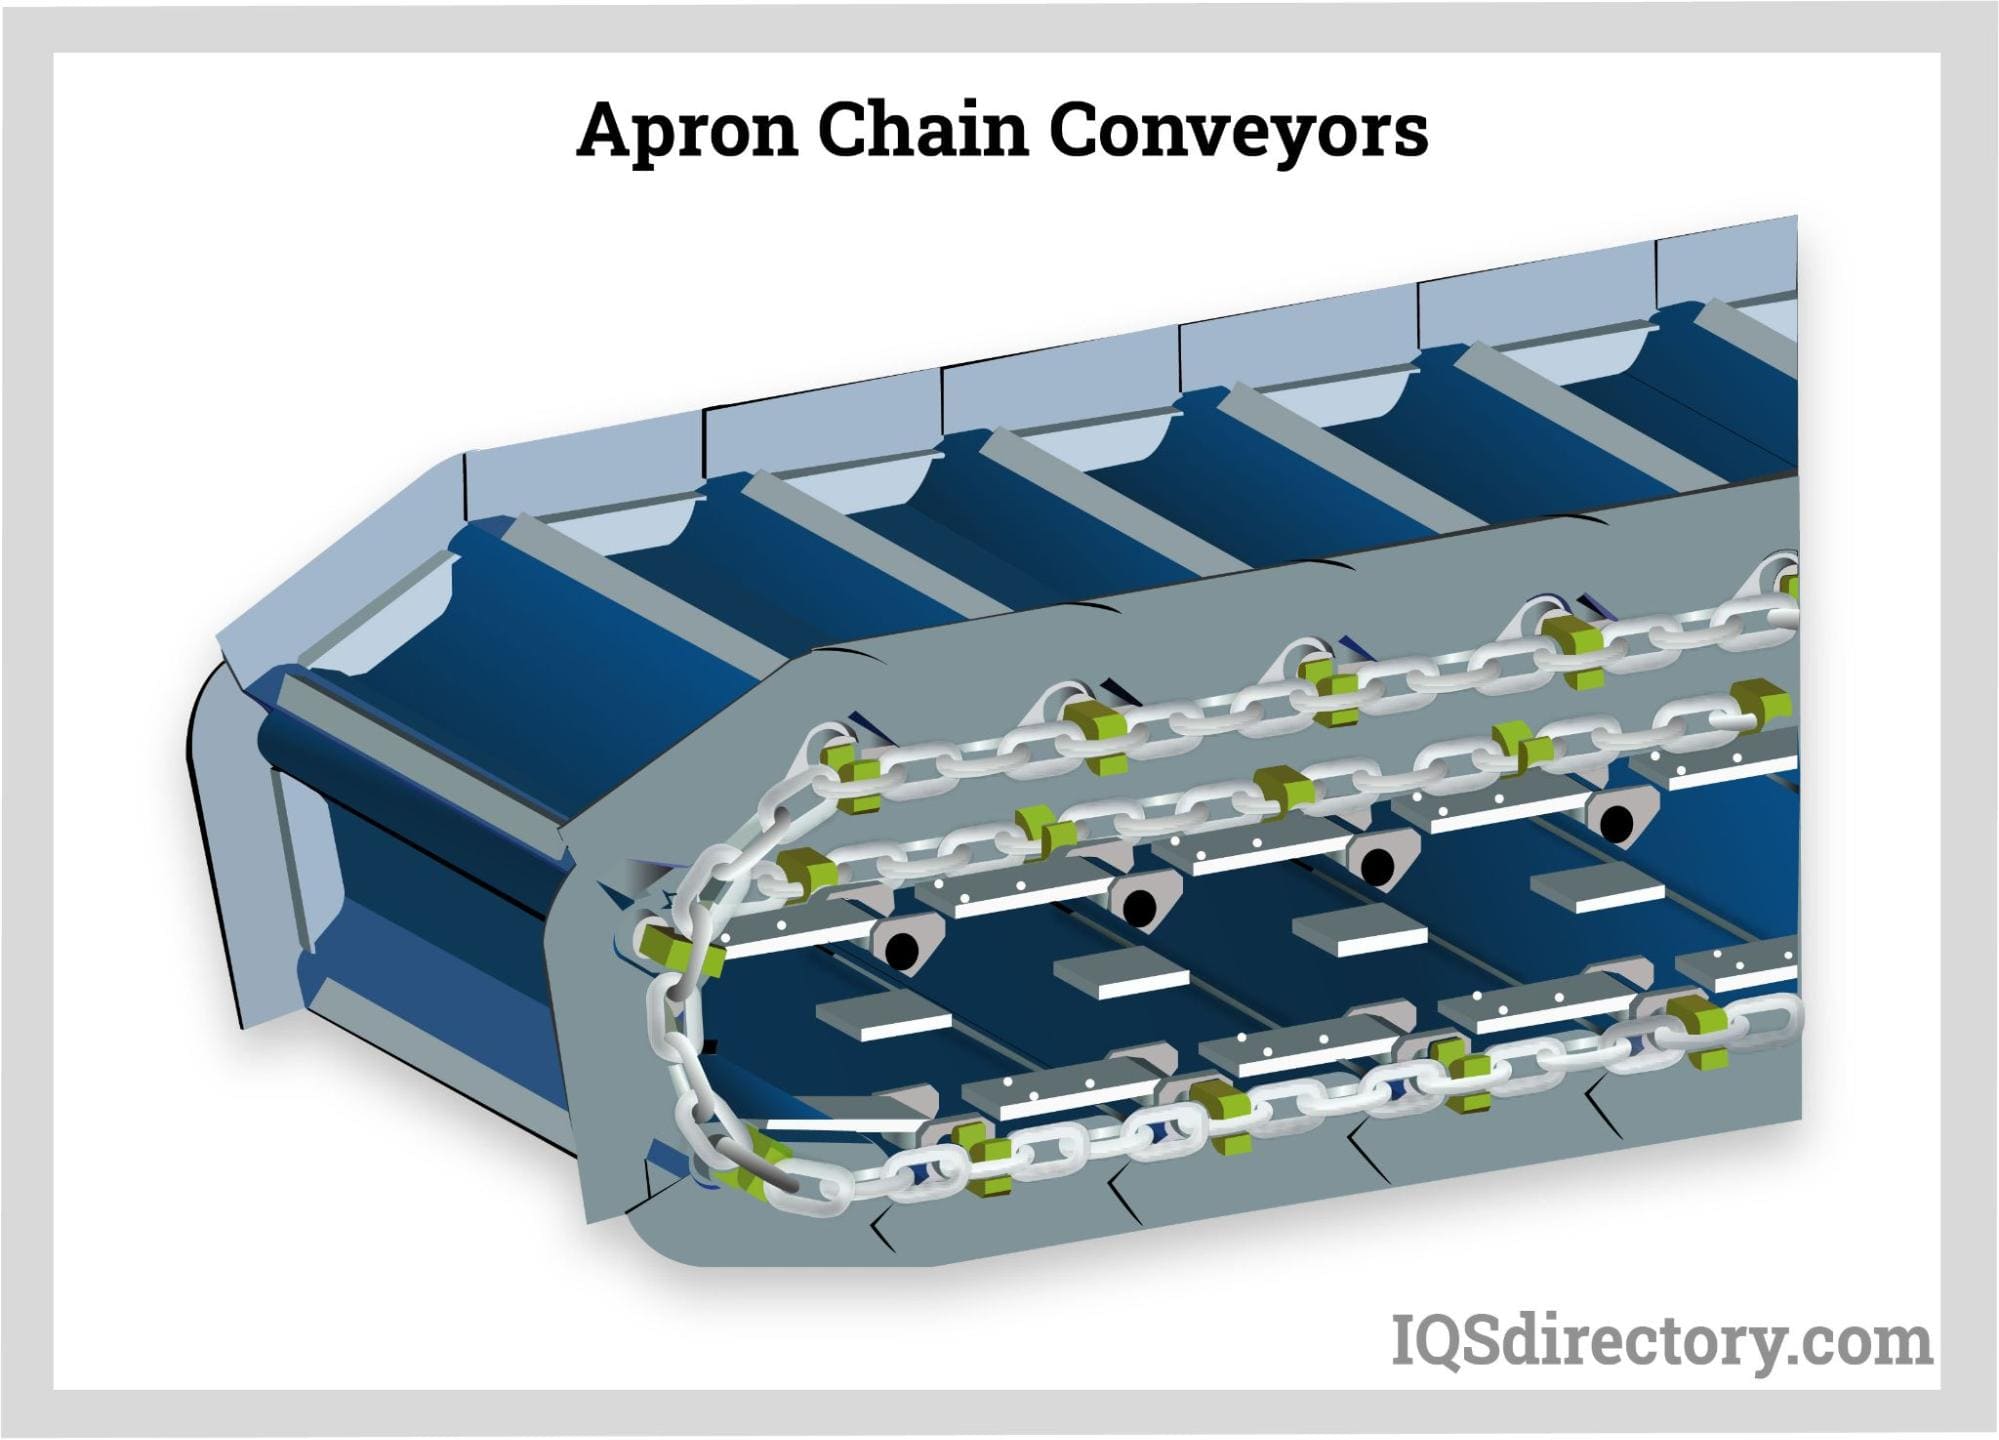 apron chain conveyors